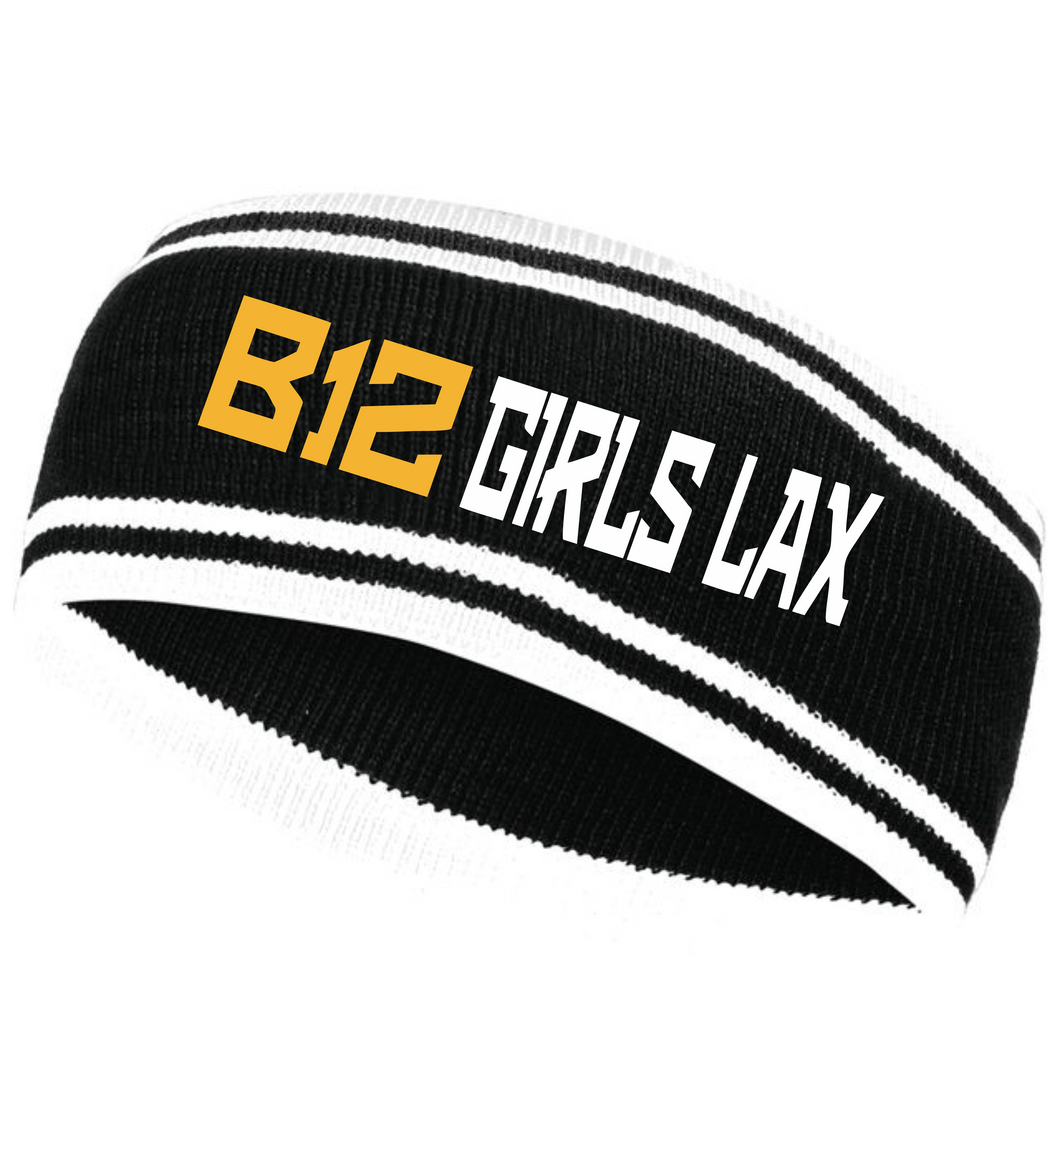 B12-LAX-899-3 - Holloway Headband - B12 Girls LAX Logo